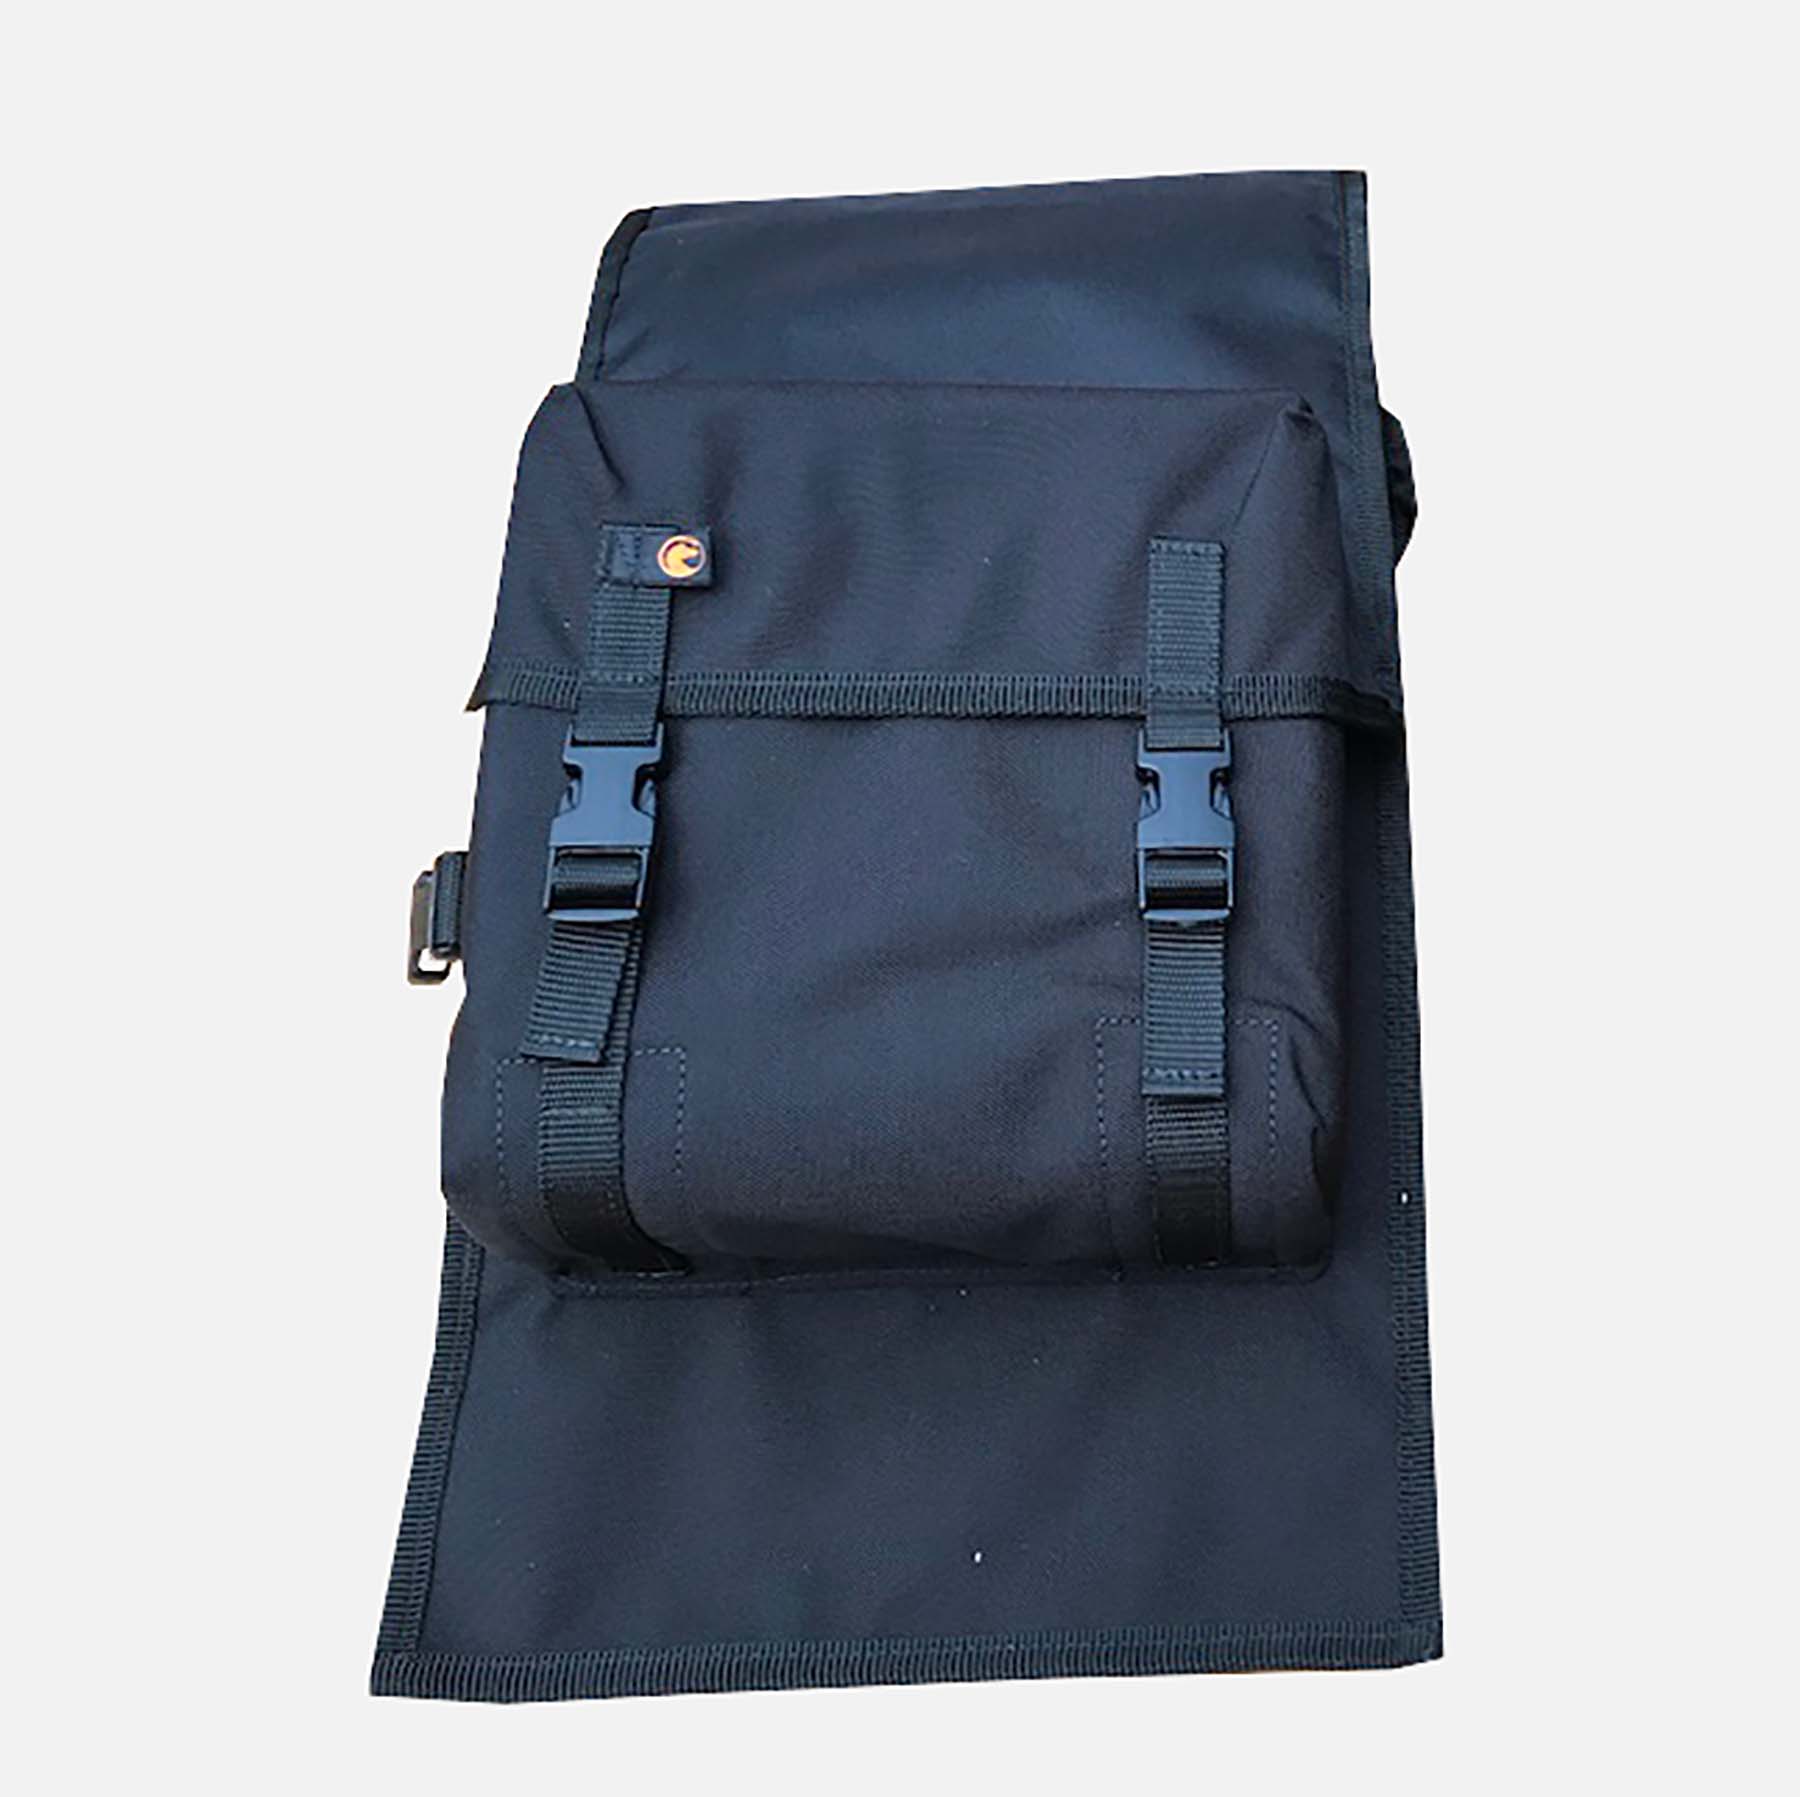 Freerein equipment saddle bag with black trim